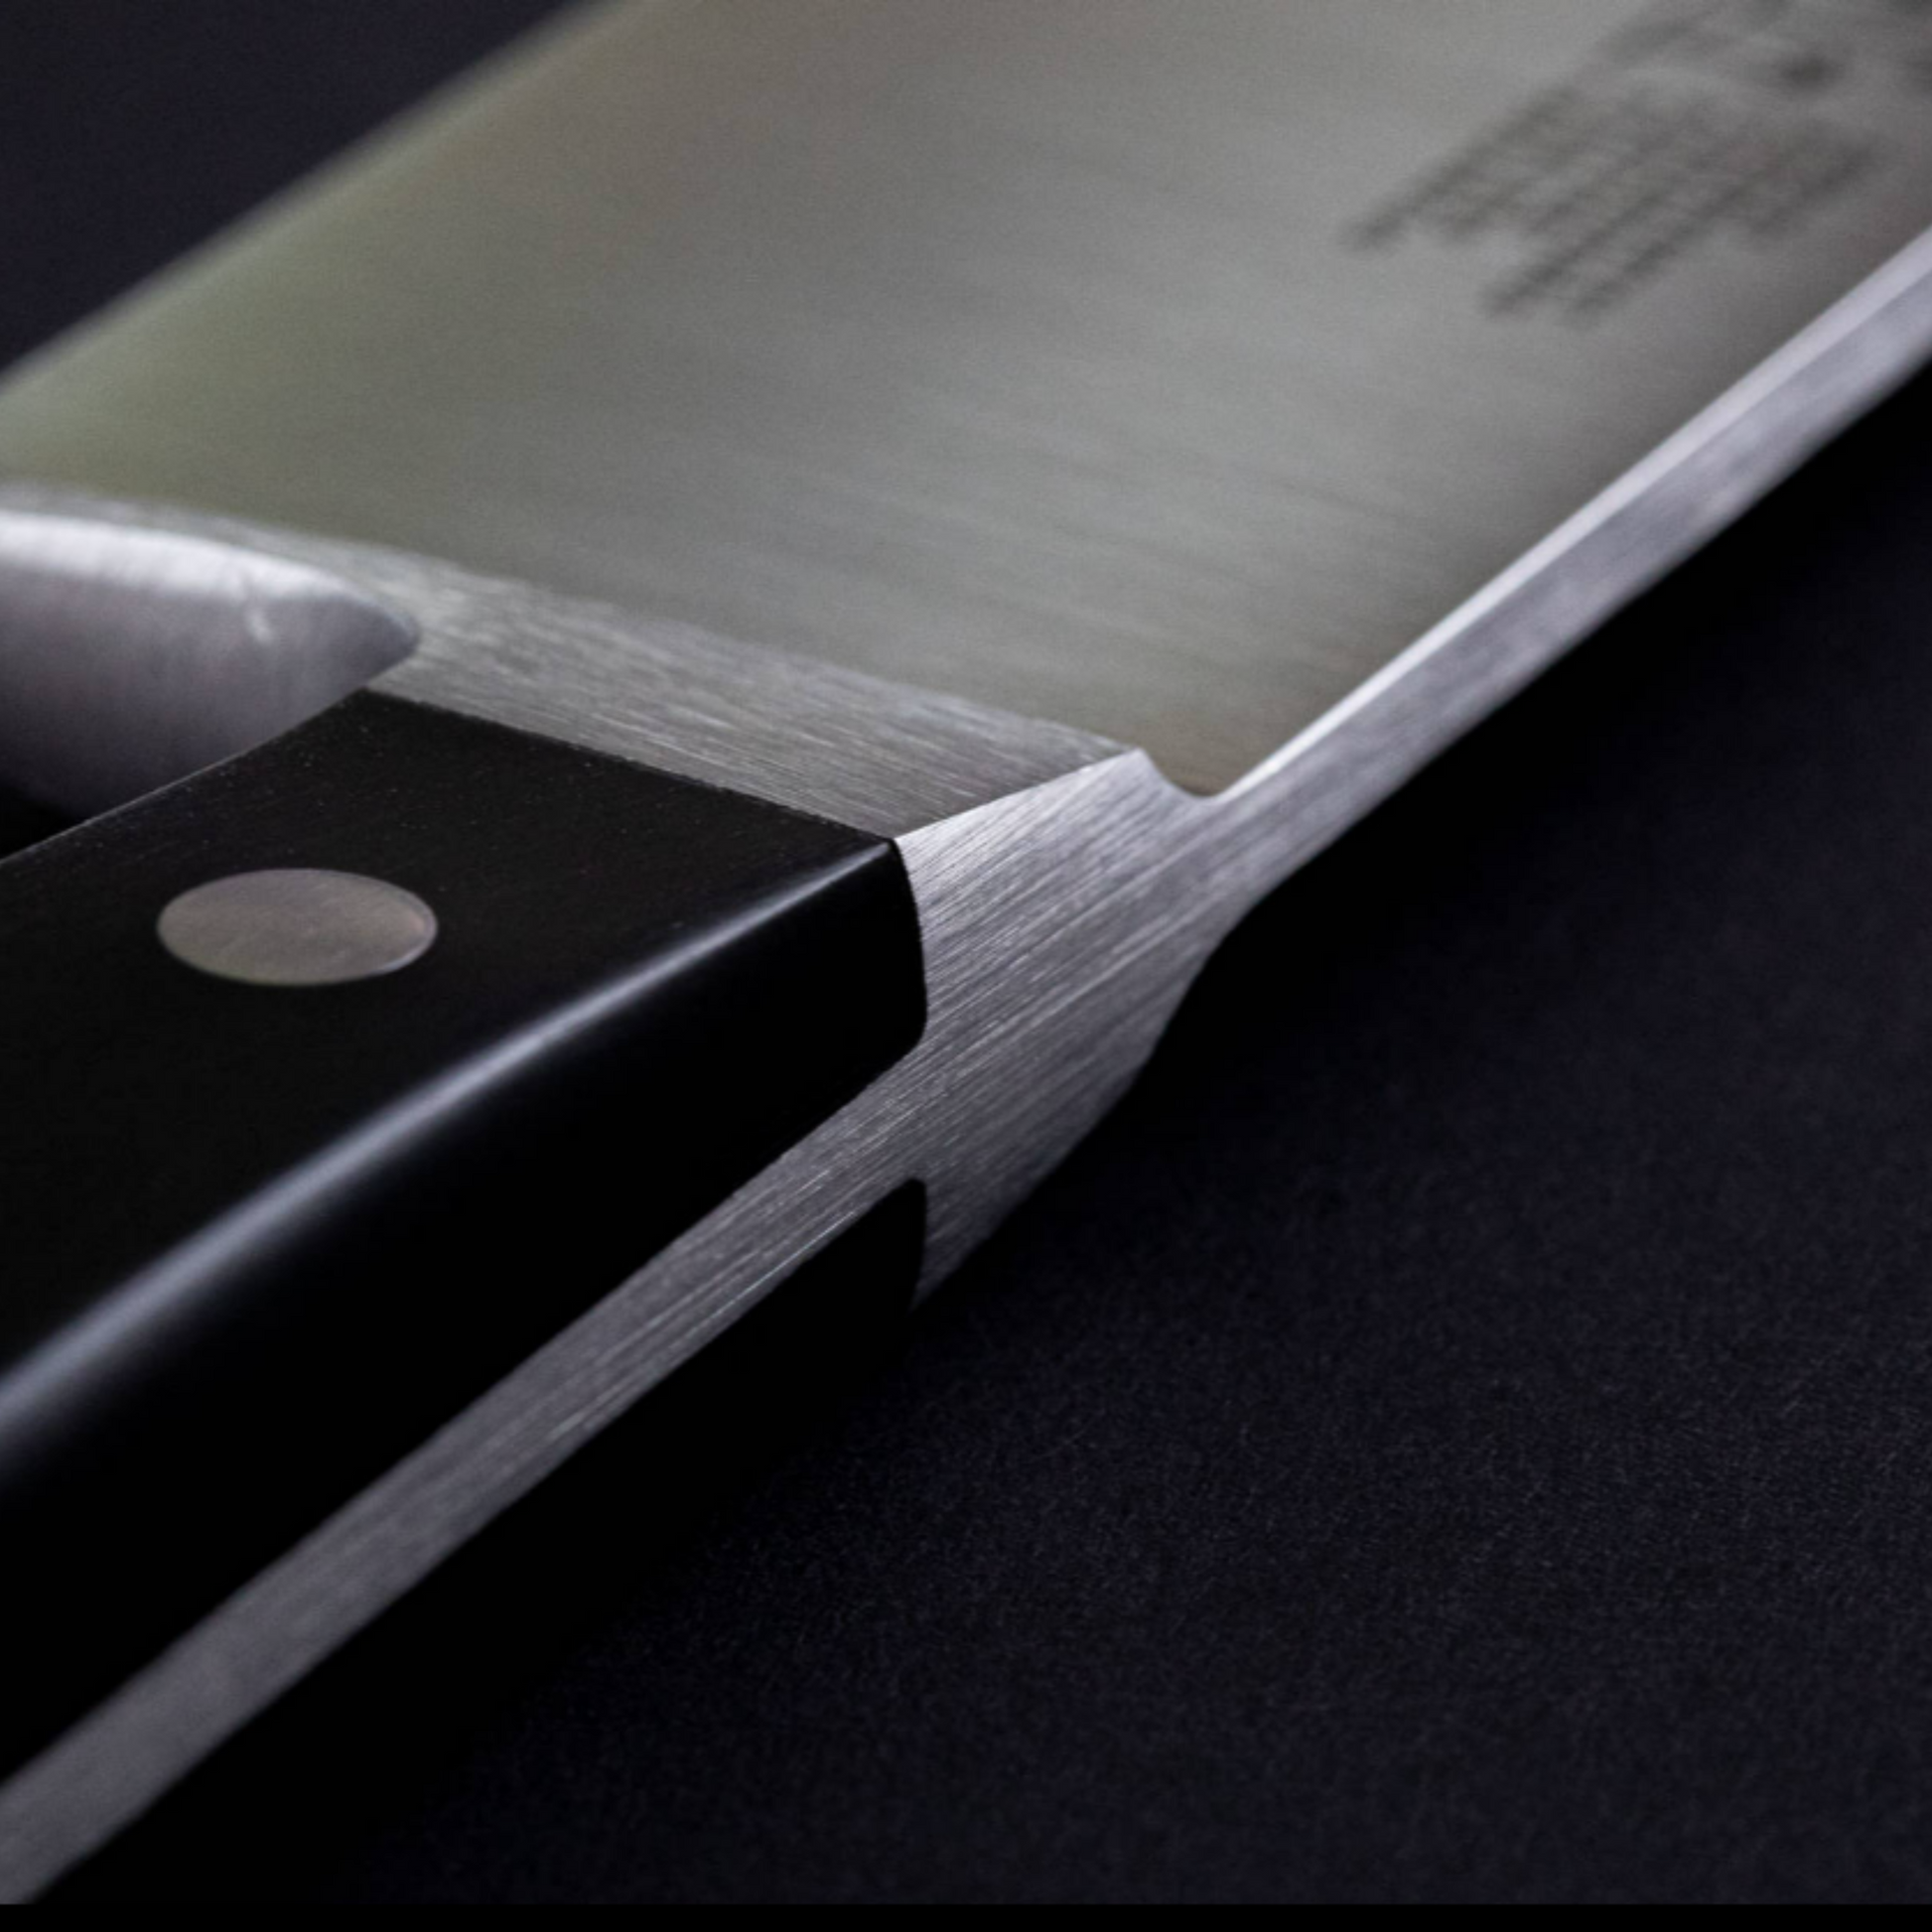 Gude Alpha Series Forged Double Bolster Porterhouse Steak Knife 4 1/2", Black Hostaform Handle and Serrated Blade - GuedeUSA